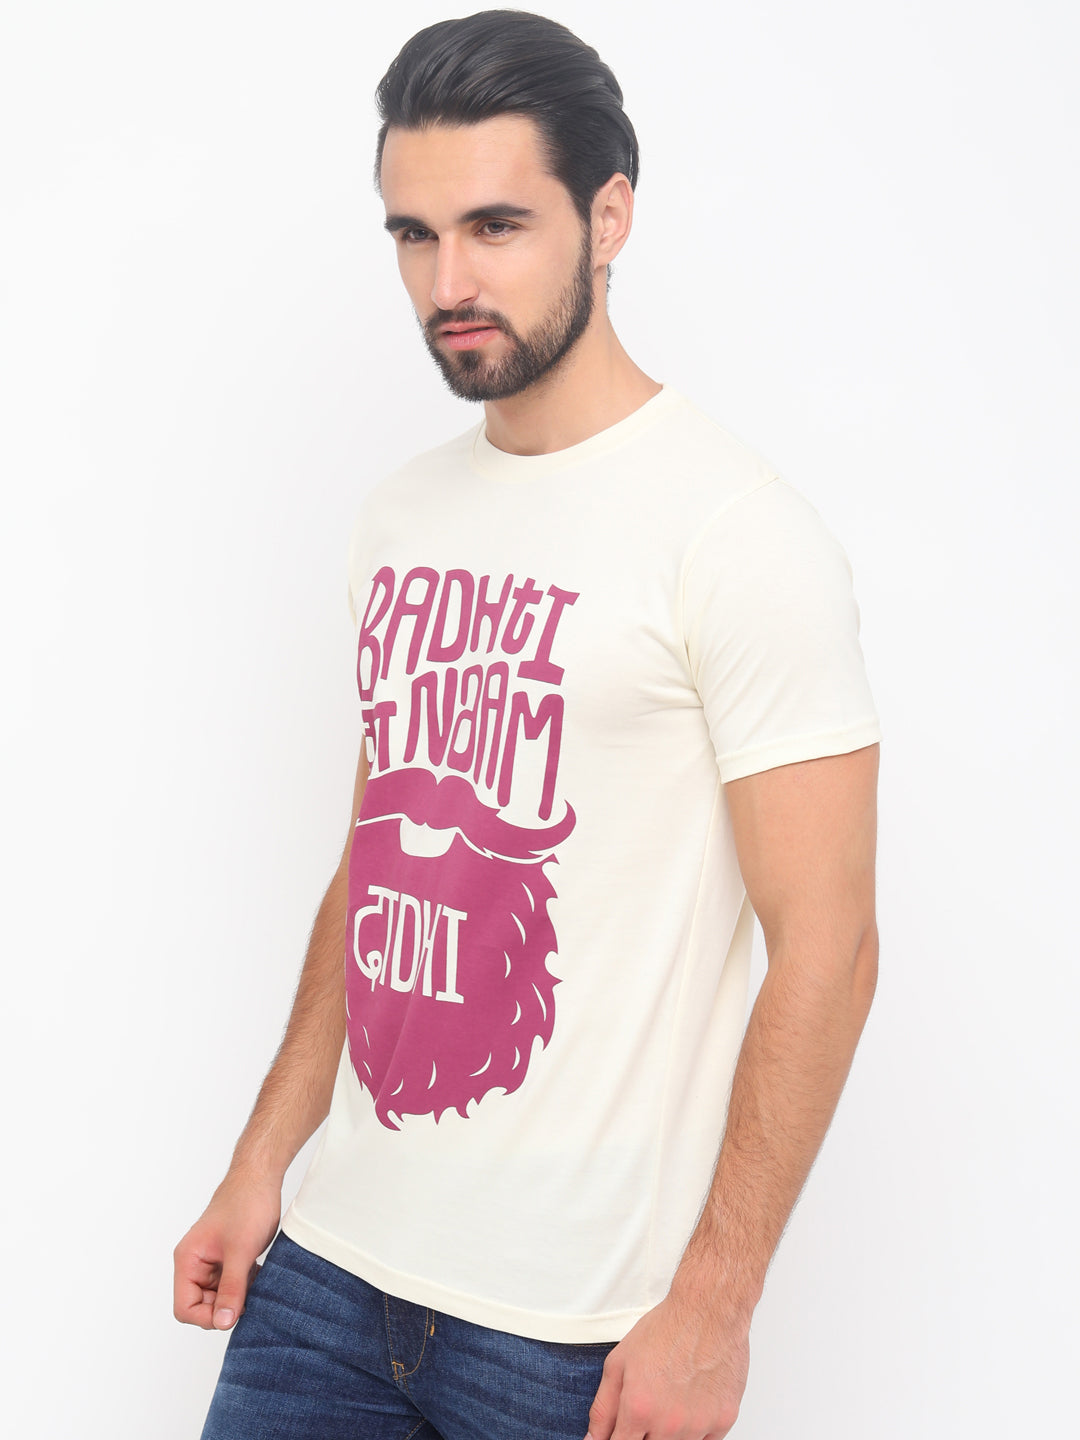 Badti Ka Naam Dadhi T-Shirt Graphic T-Shirts Bushirt   